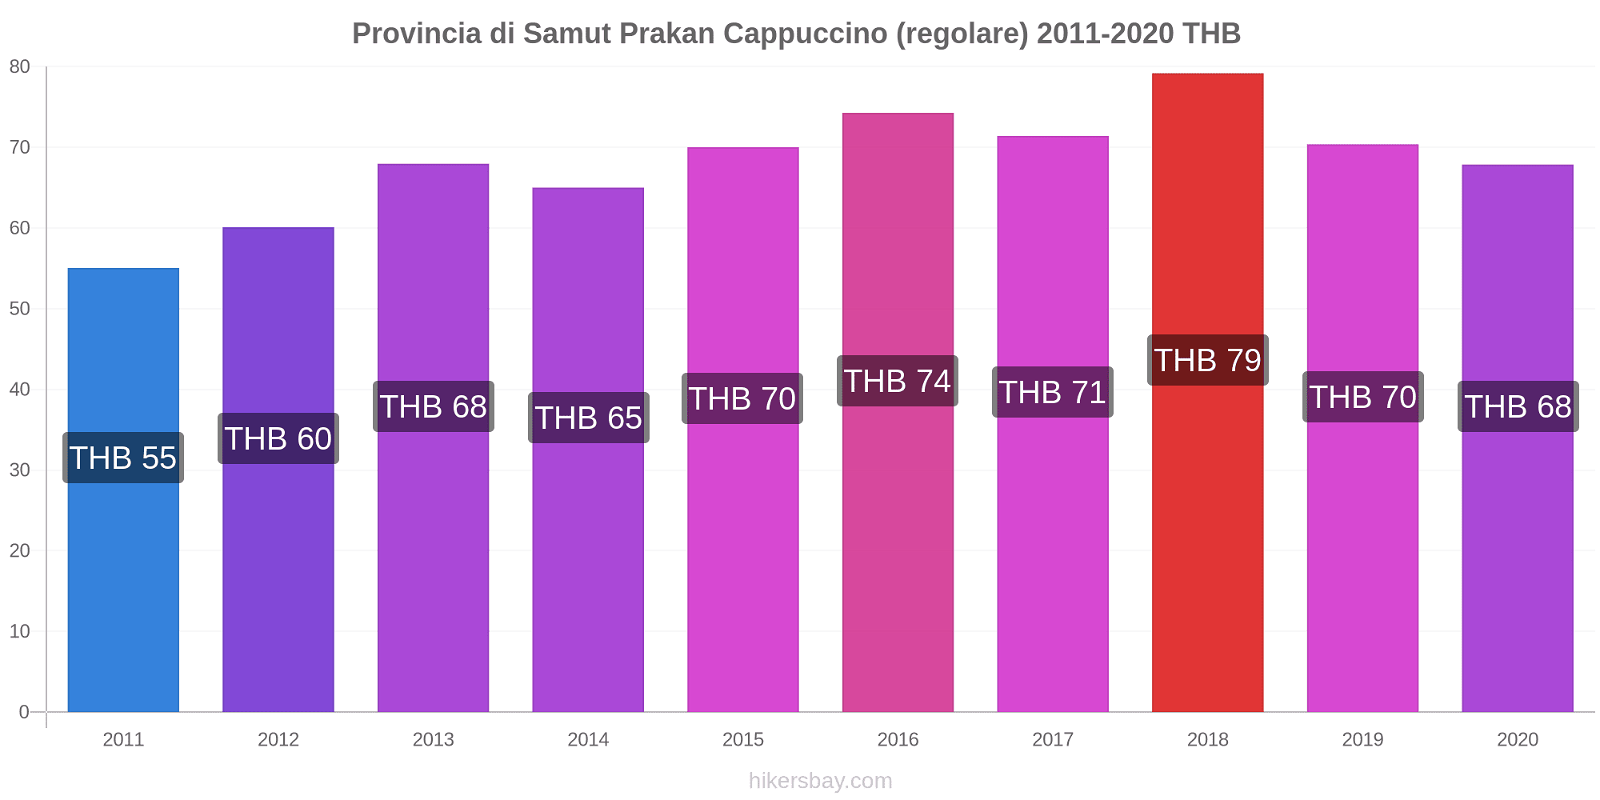 Provincia di Samut Prakan variazioni di prezzo Cappuccino (normale) hikersbay.com